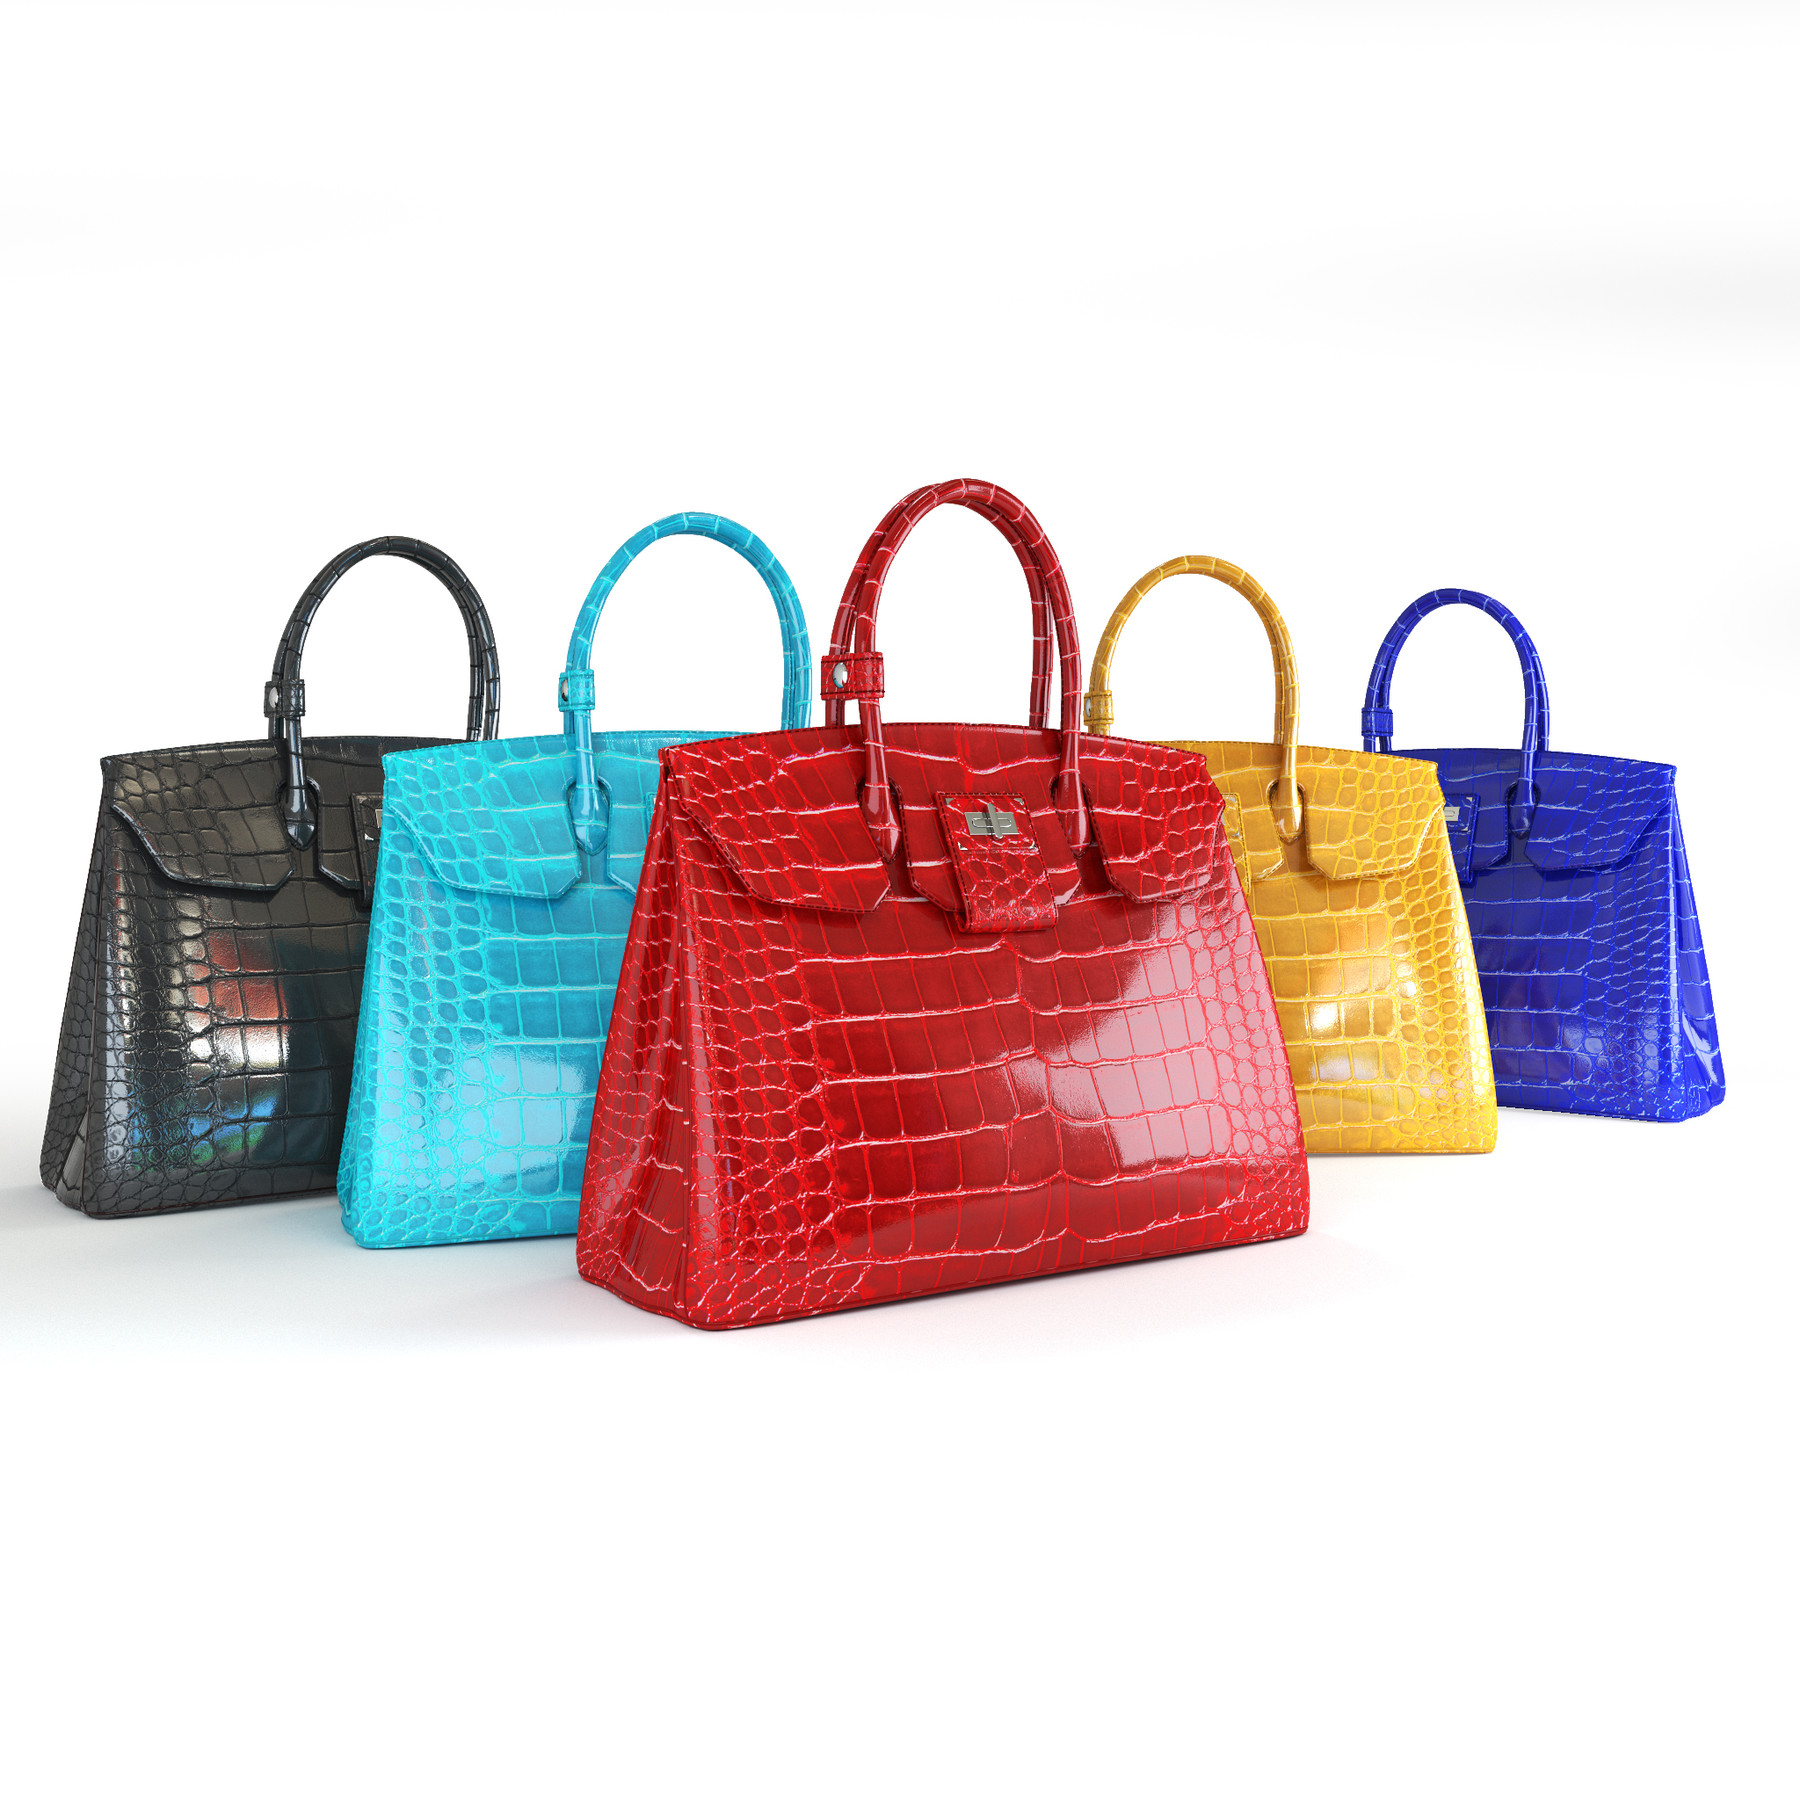 Hermes Birkin Female Handbags 